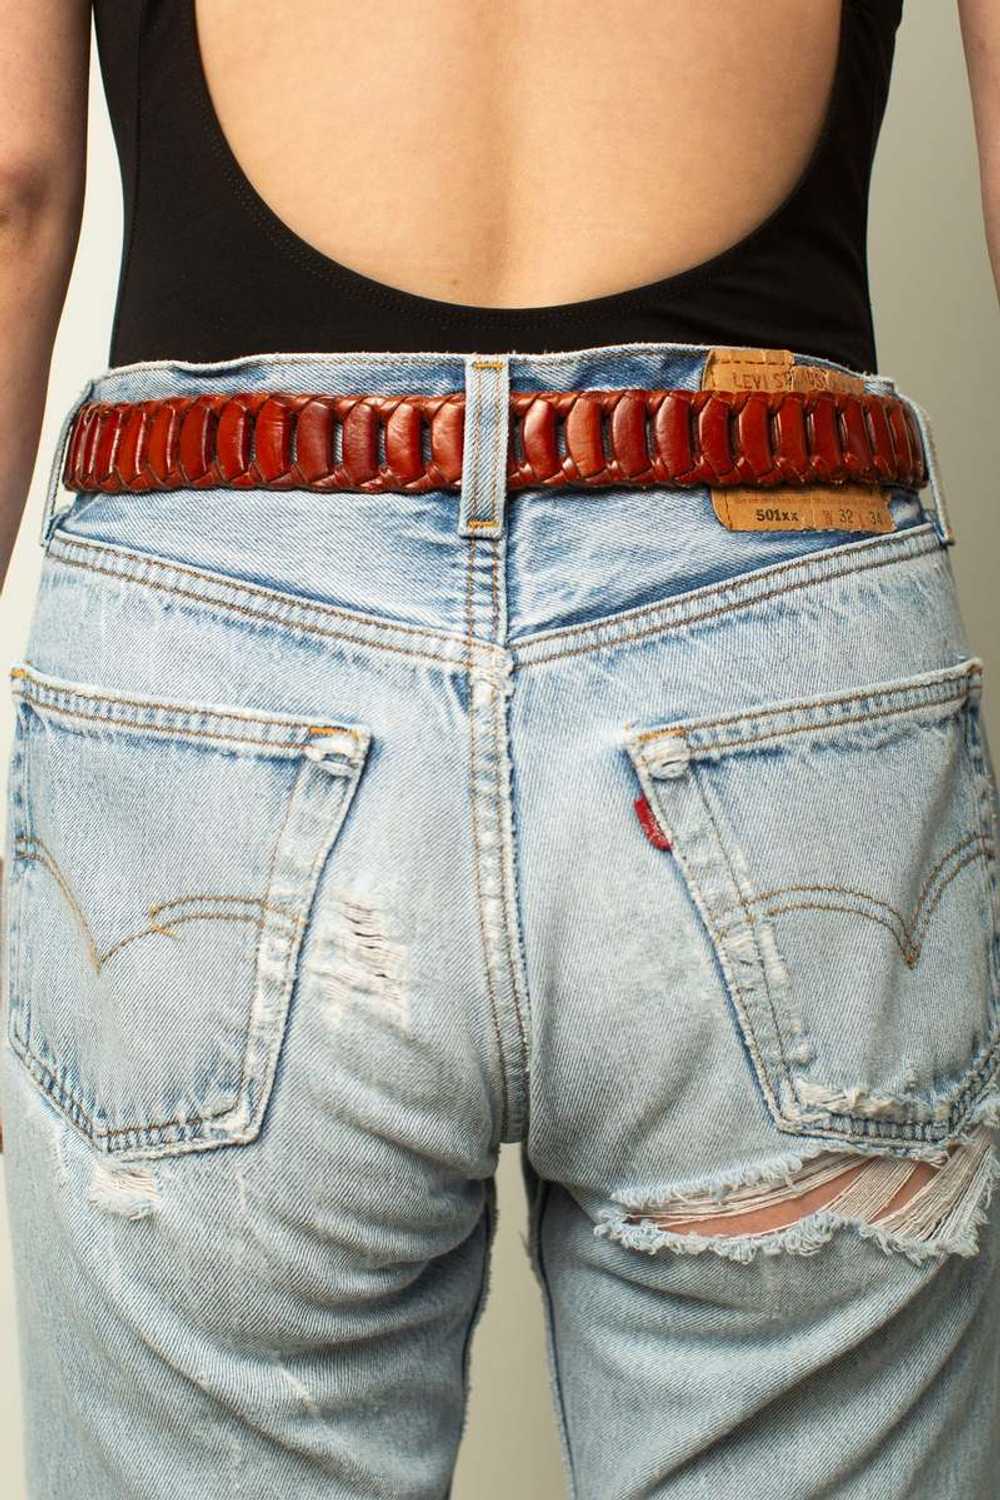 Vintage Woven Leather Belt - Brown - image 3